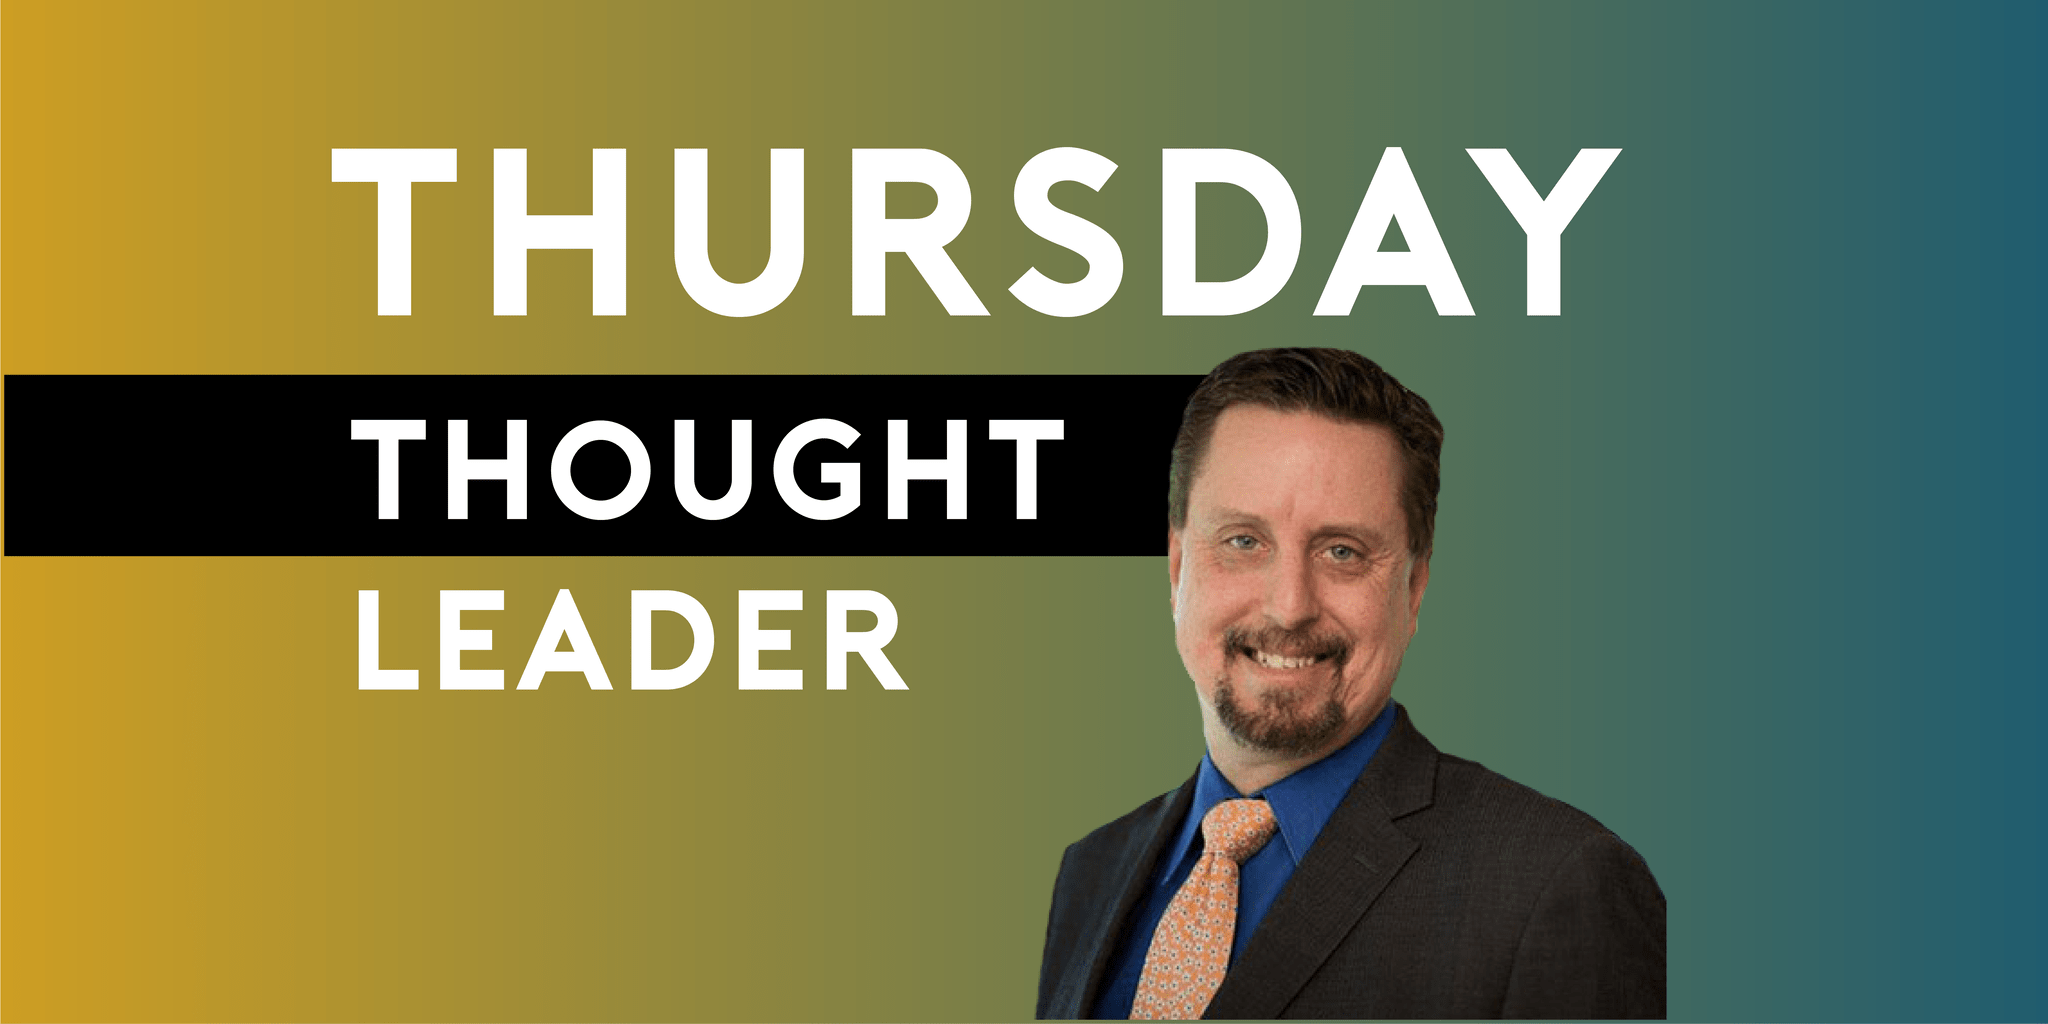 David J. Frankenberger of Ericksen Arbuthnot is LegalNet Inc's Thursday Thought Leader